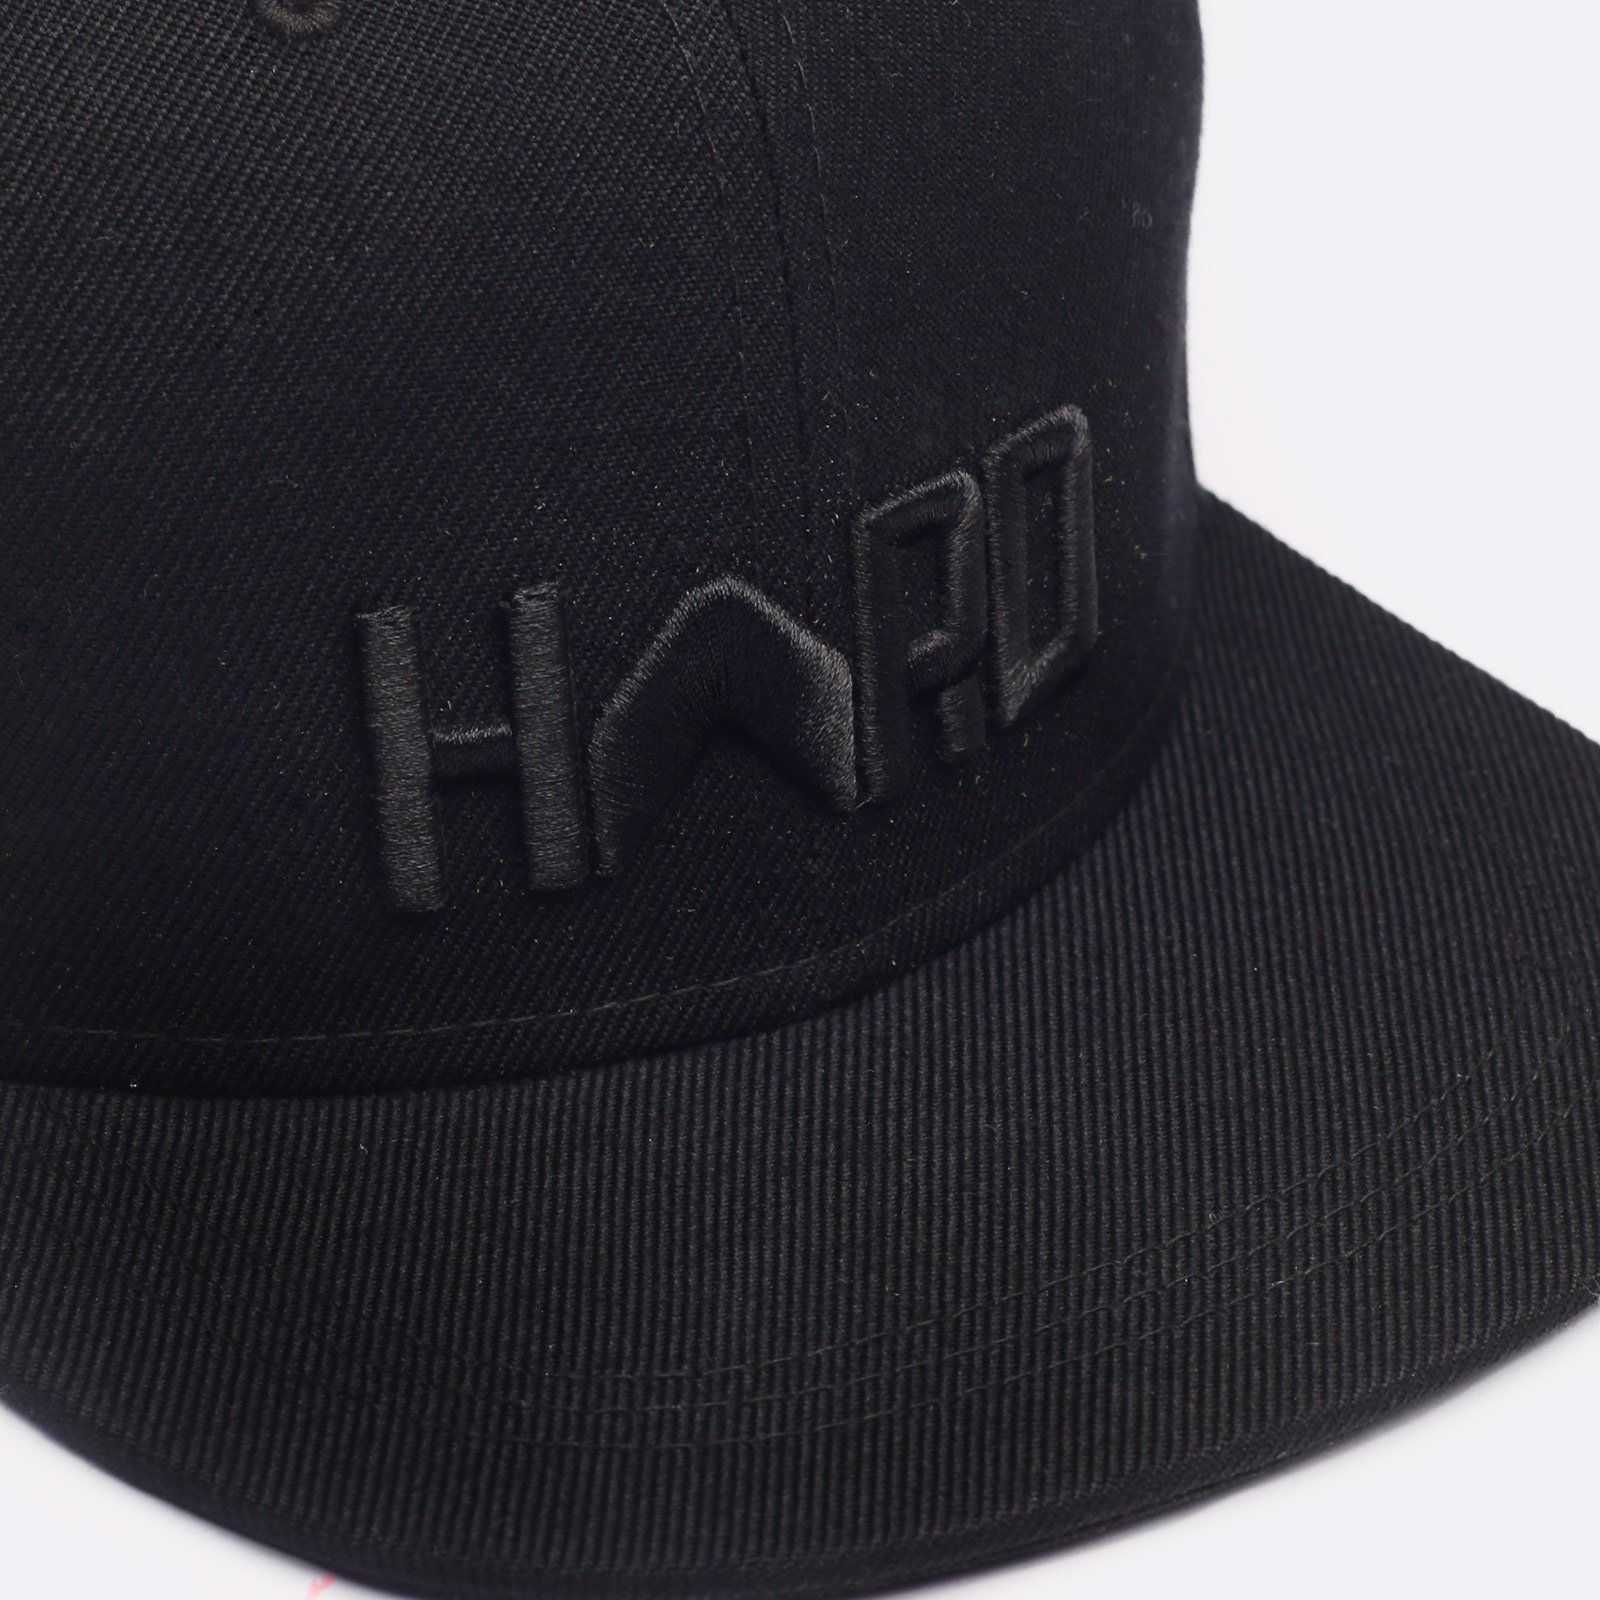 мужская черная кепка Hard Logo Snapback Hard blk/blk-0015 - цена, описание, фото 3